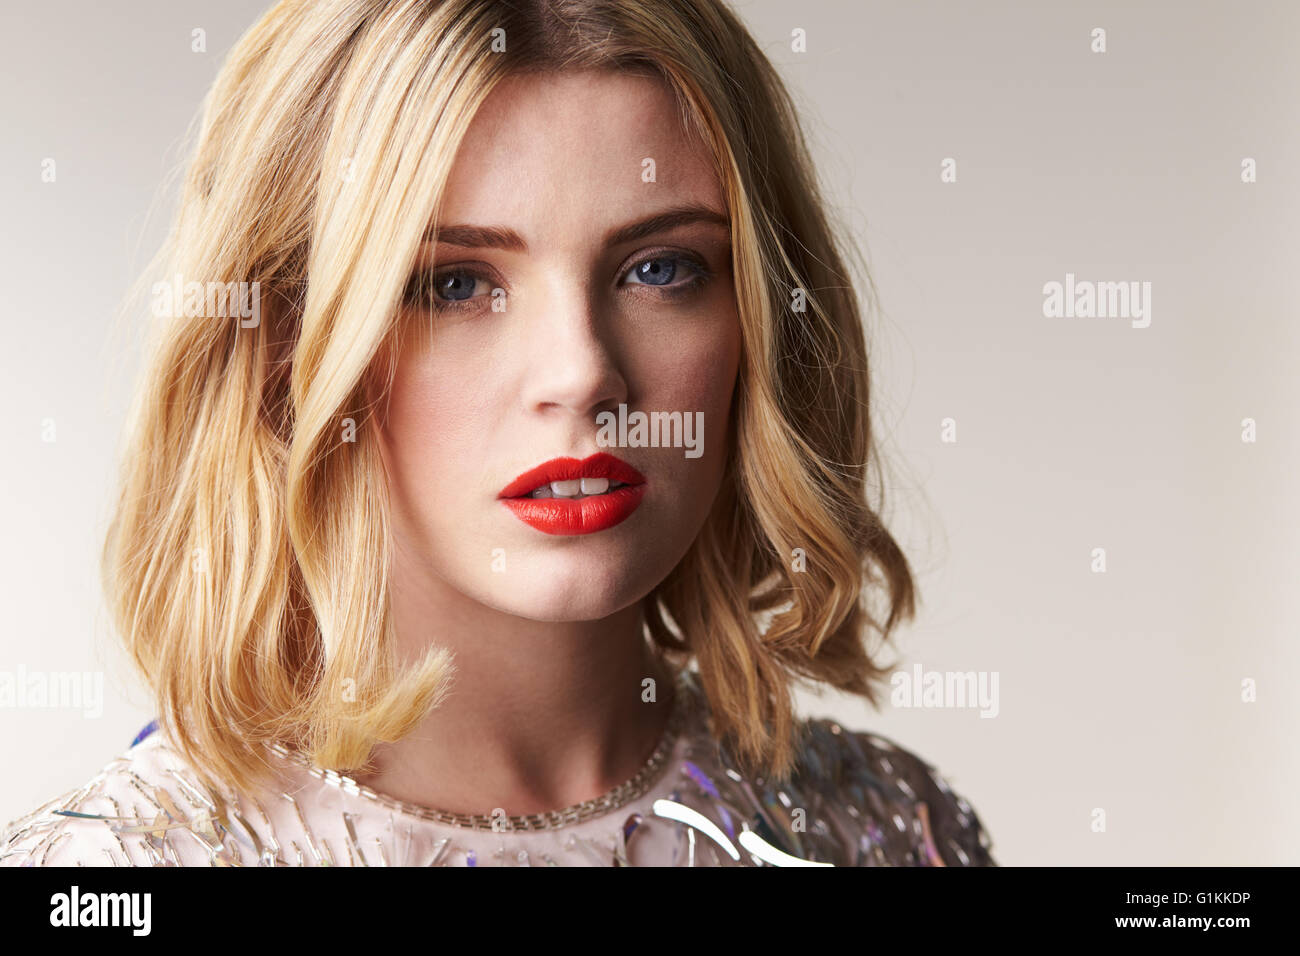 Glamorous blonde woman looks to camera, horizontal portrait Stock Photo